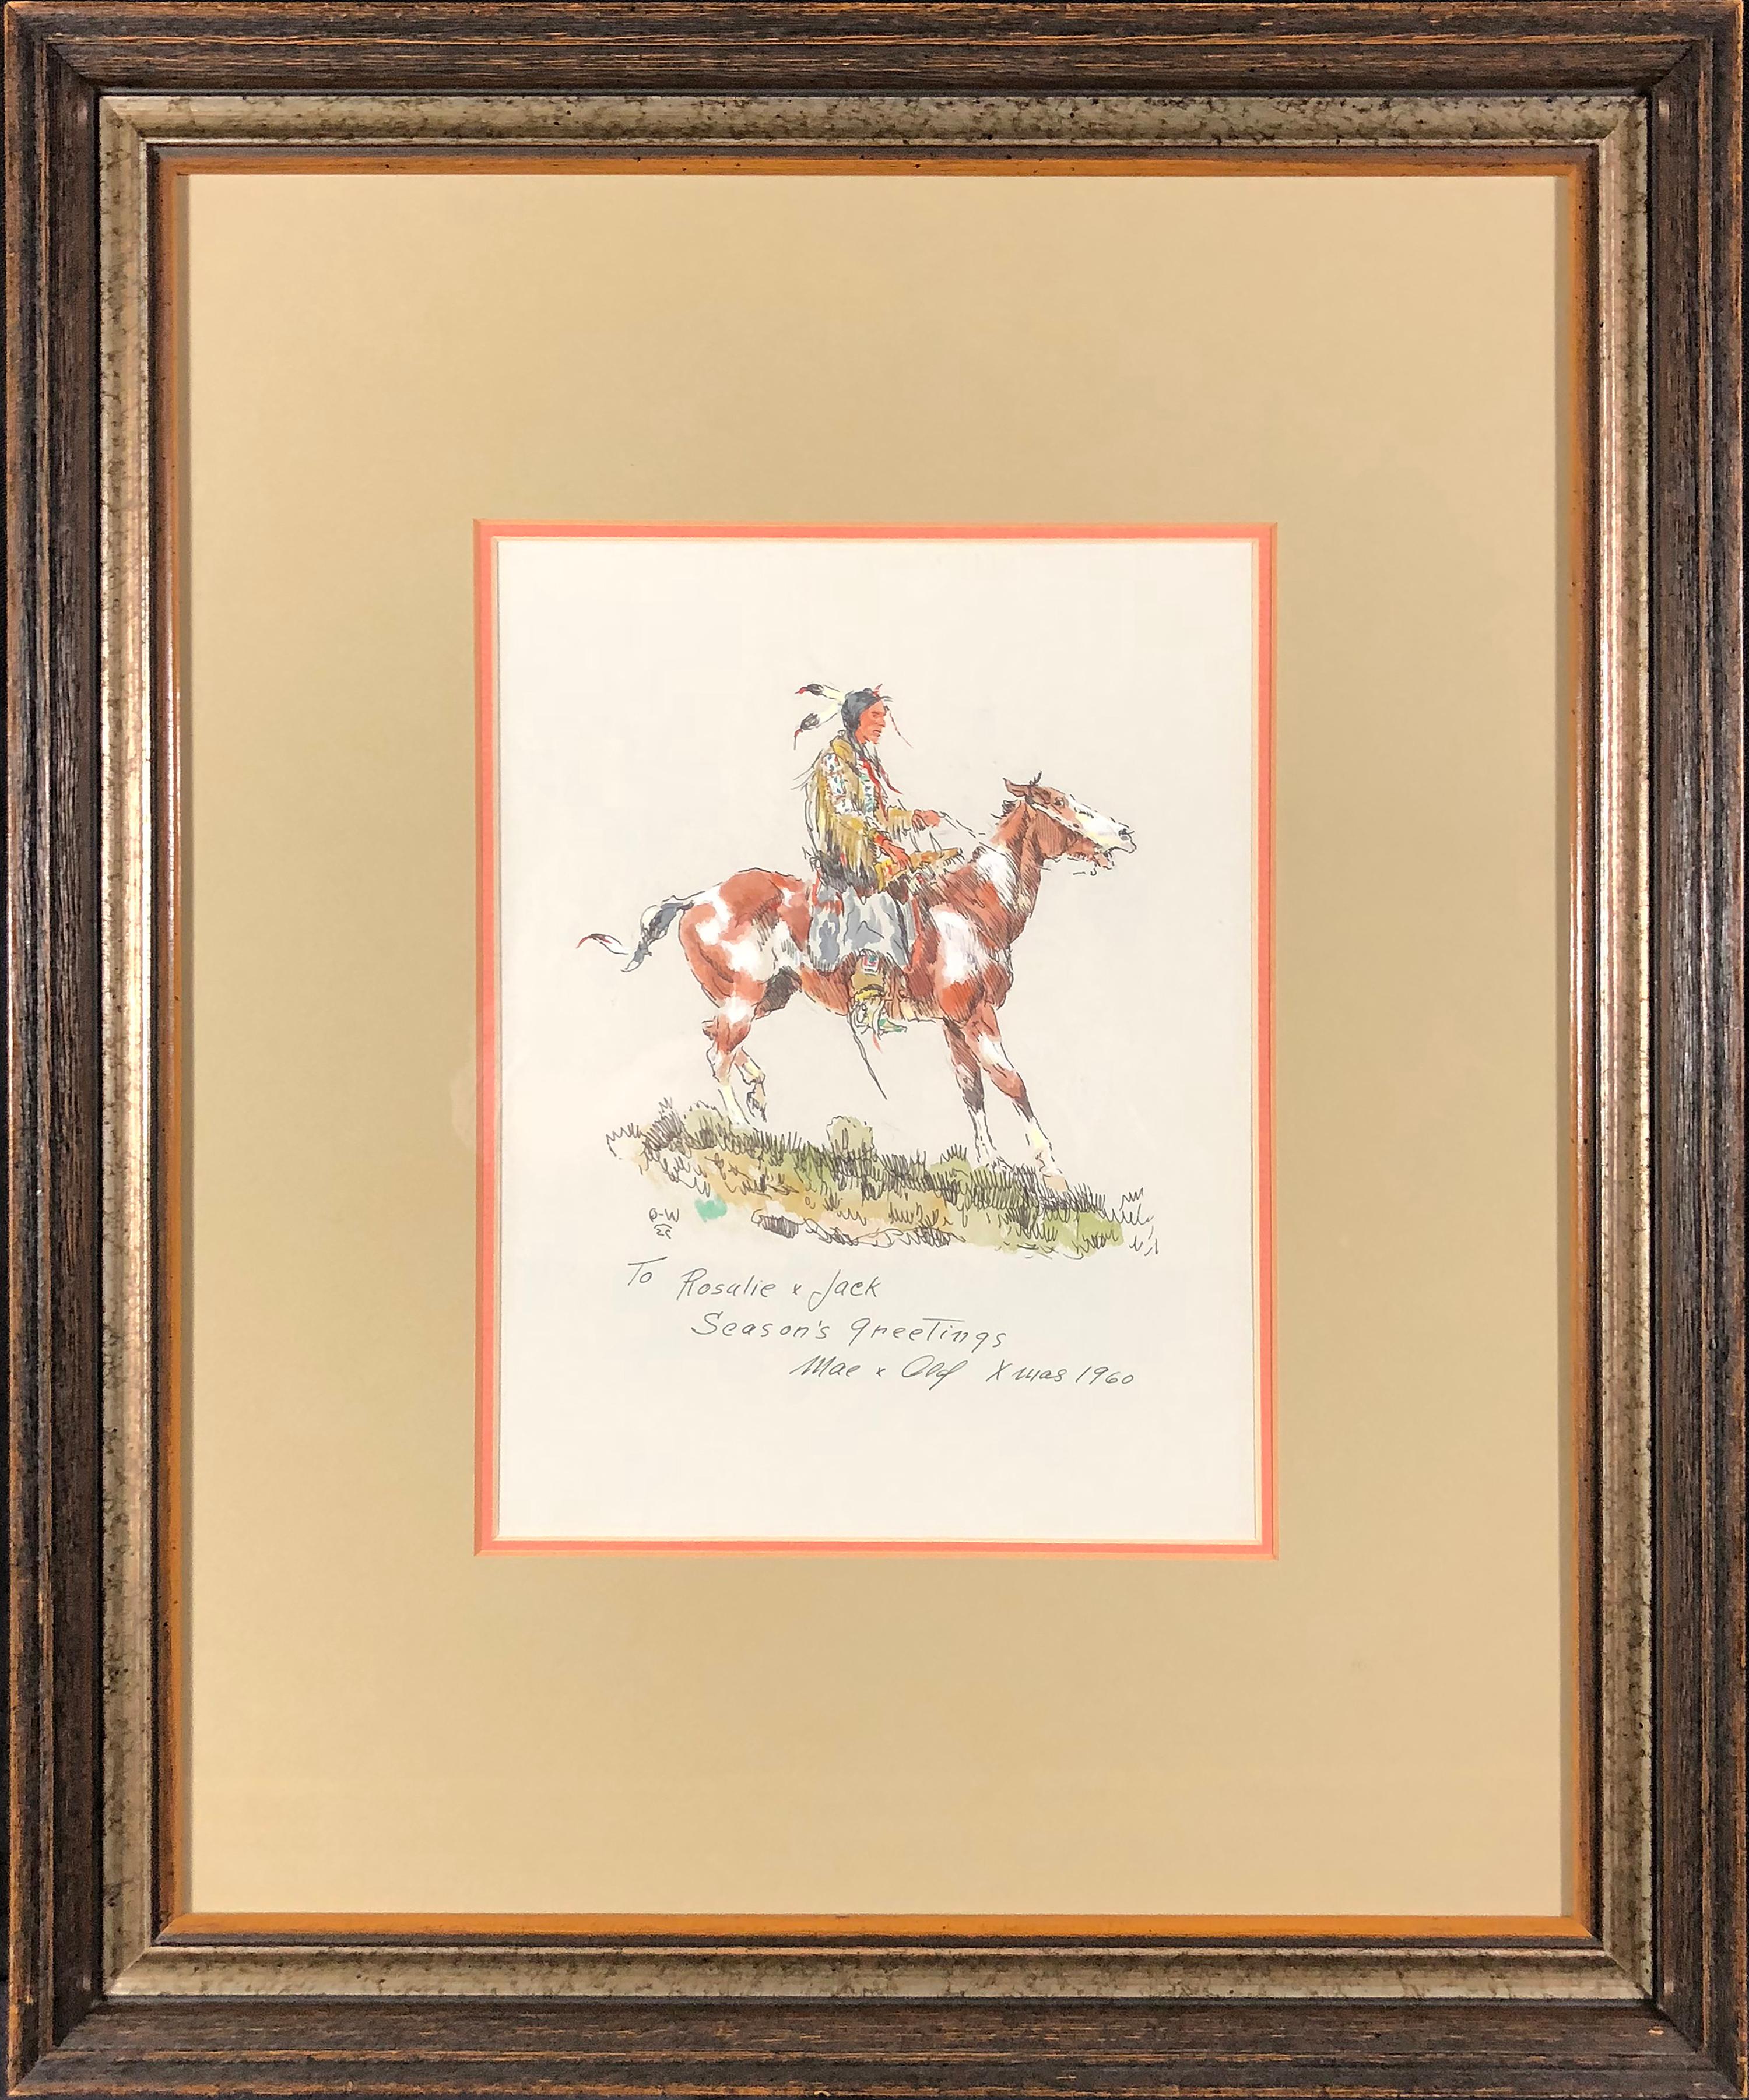 Season's Greetings 1960 (Brave on Horseback) – Art von Olaf Wieghorst